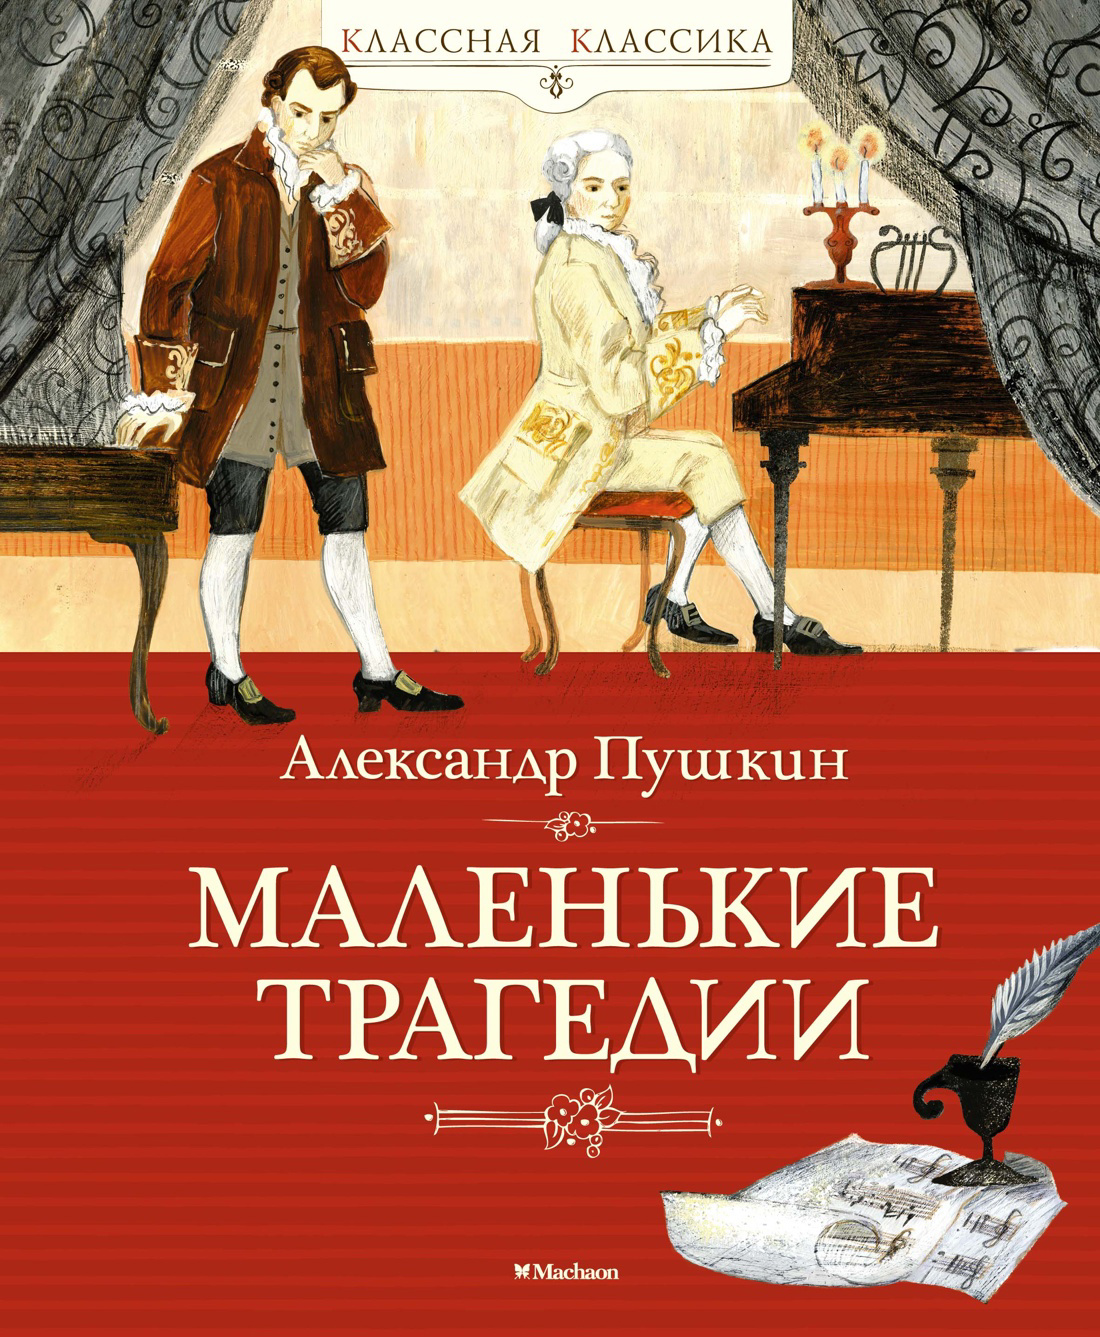 Пушкин Александр Сергеевич Маленькие трагедии болдино осень 1830 фотокнига